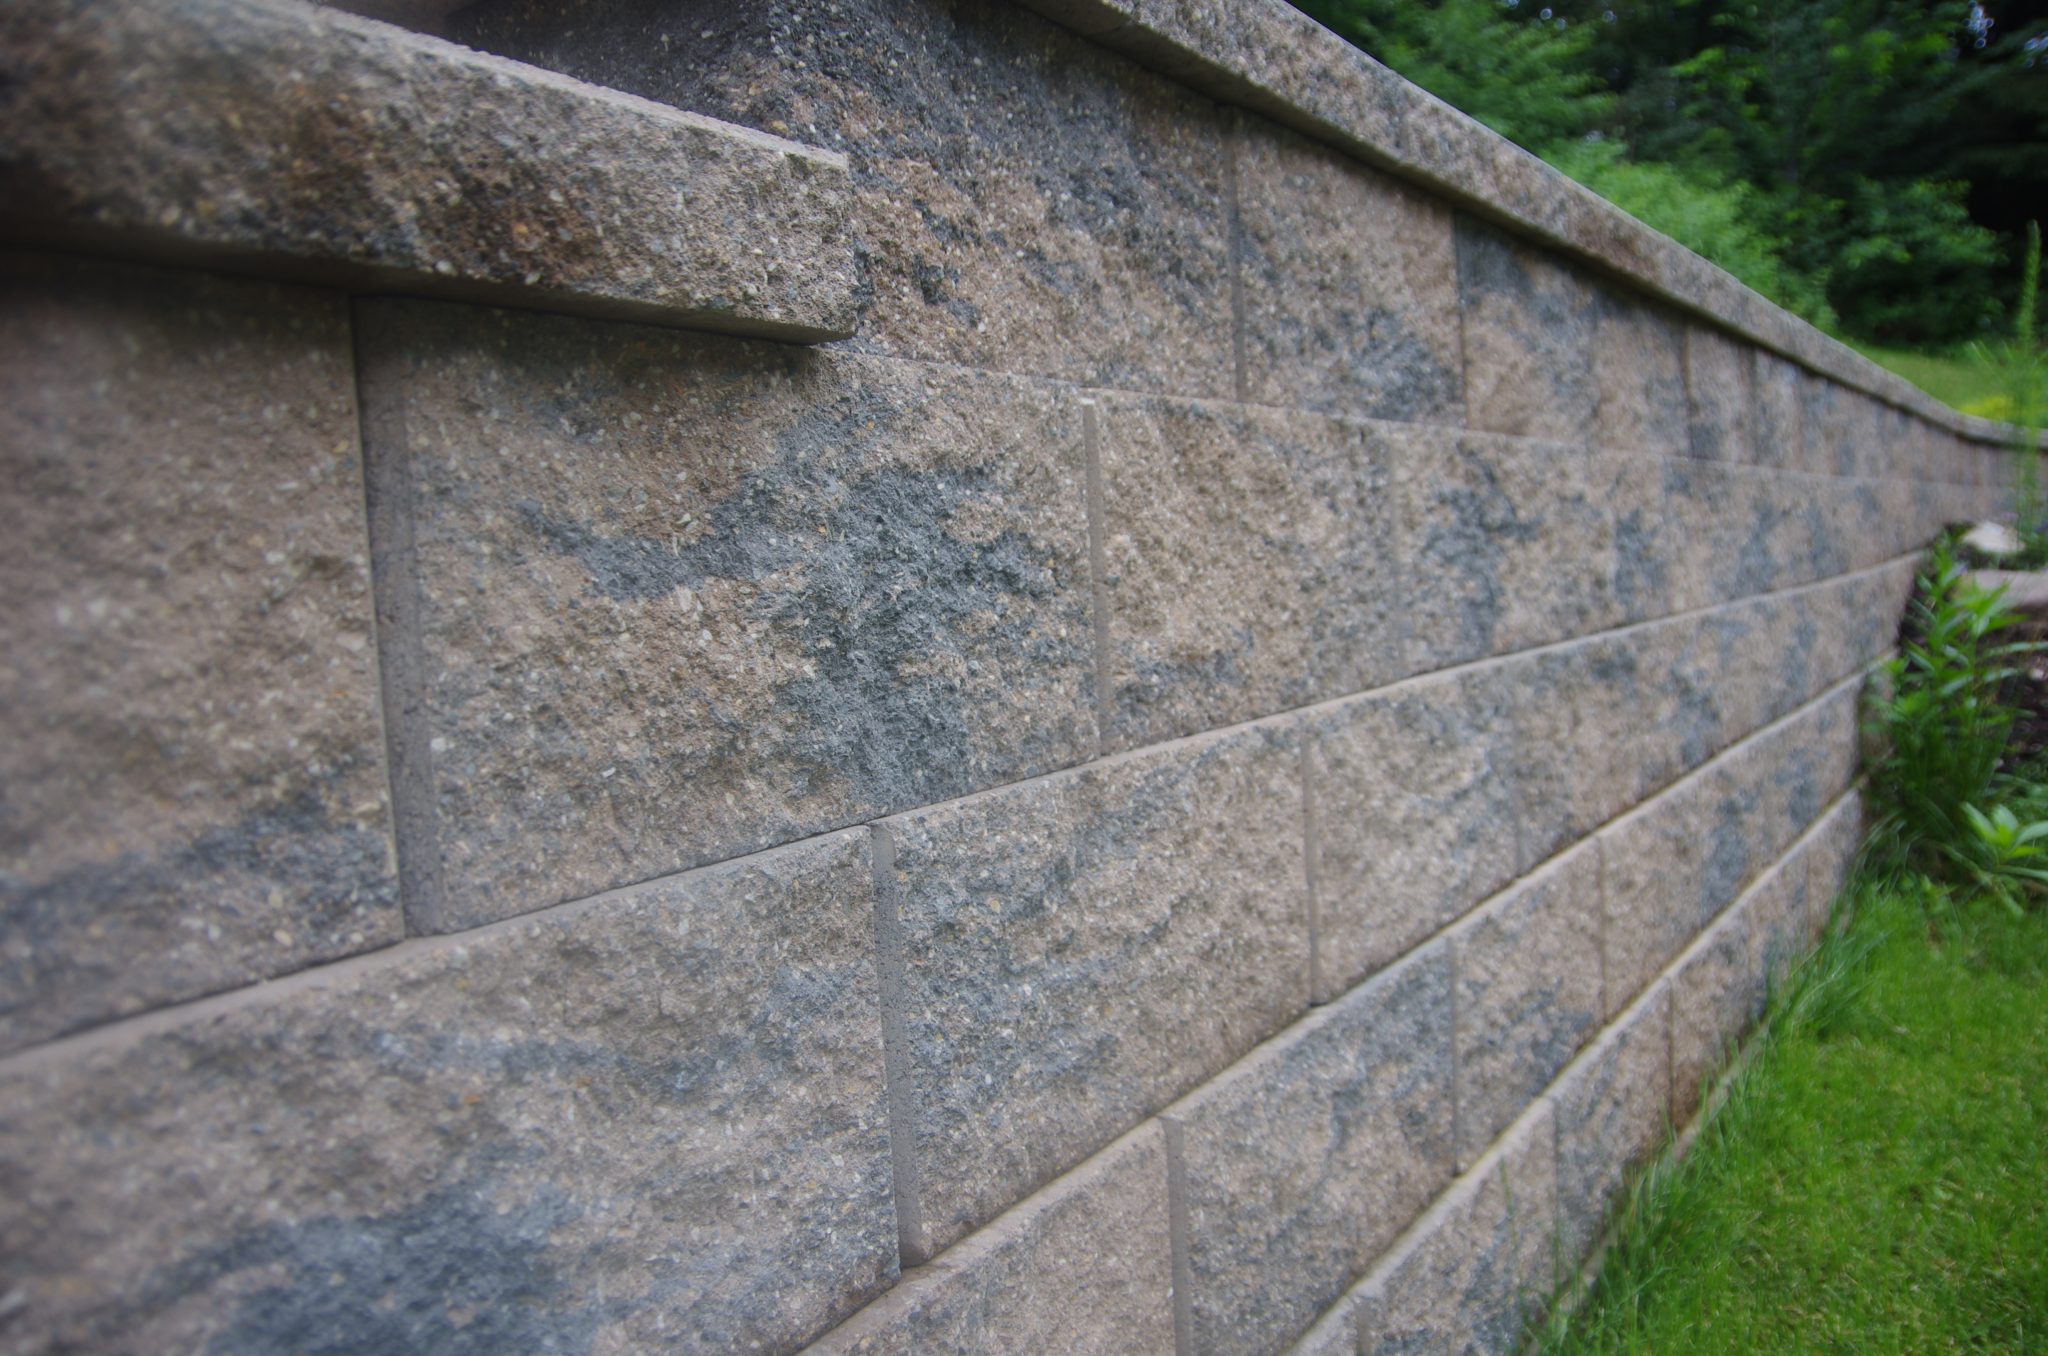 CornerStone 100 retaining wall facing aesthetics